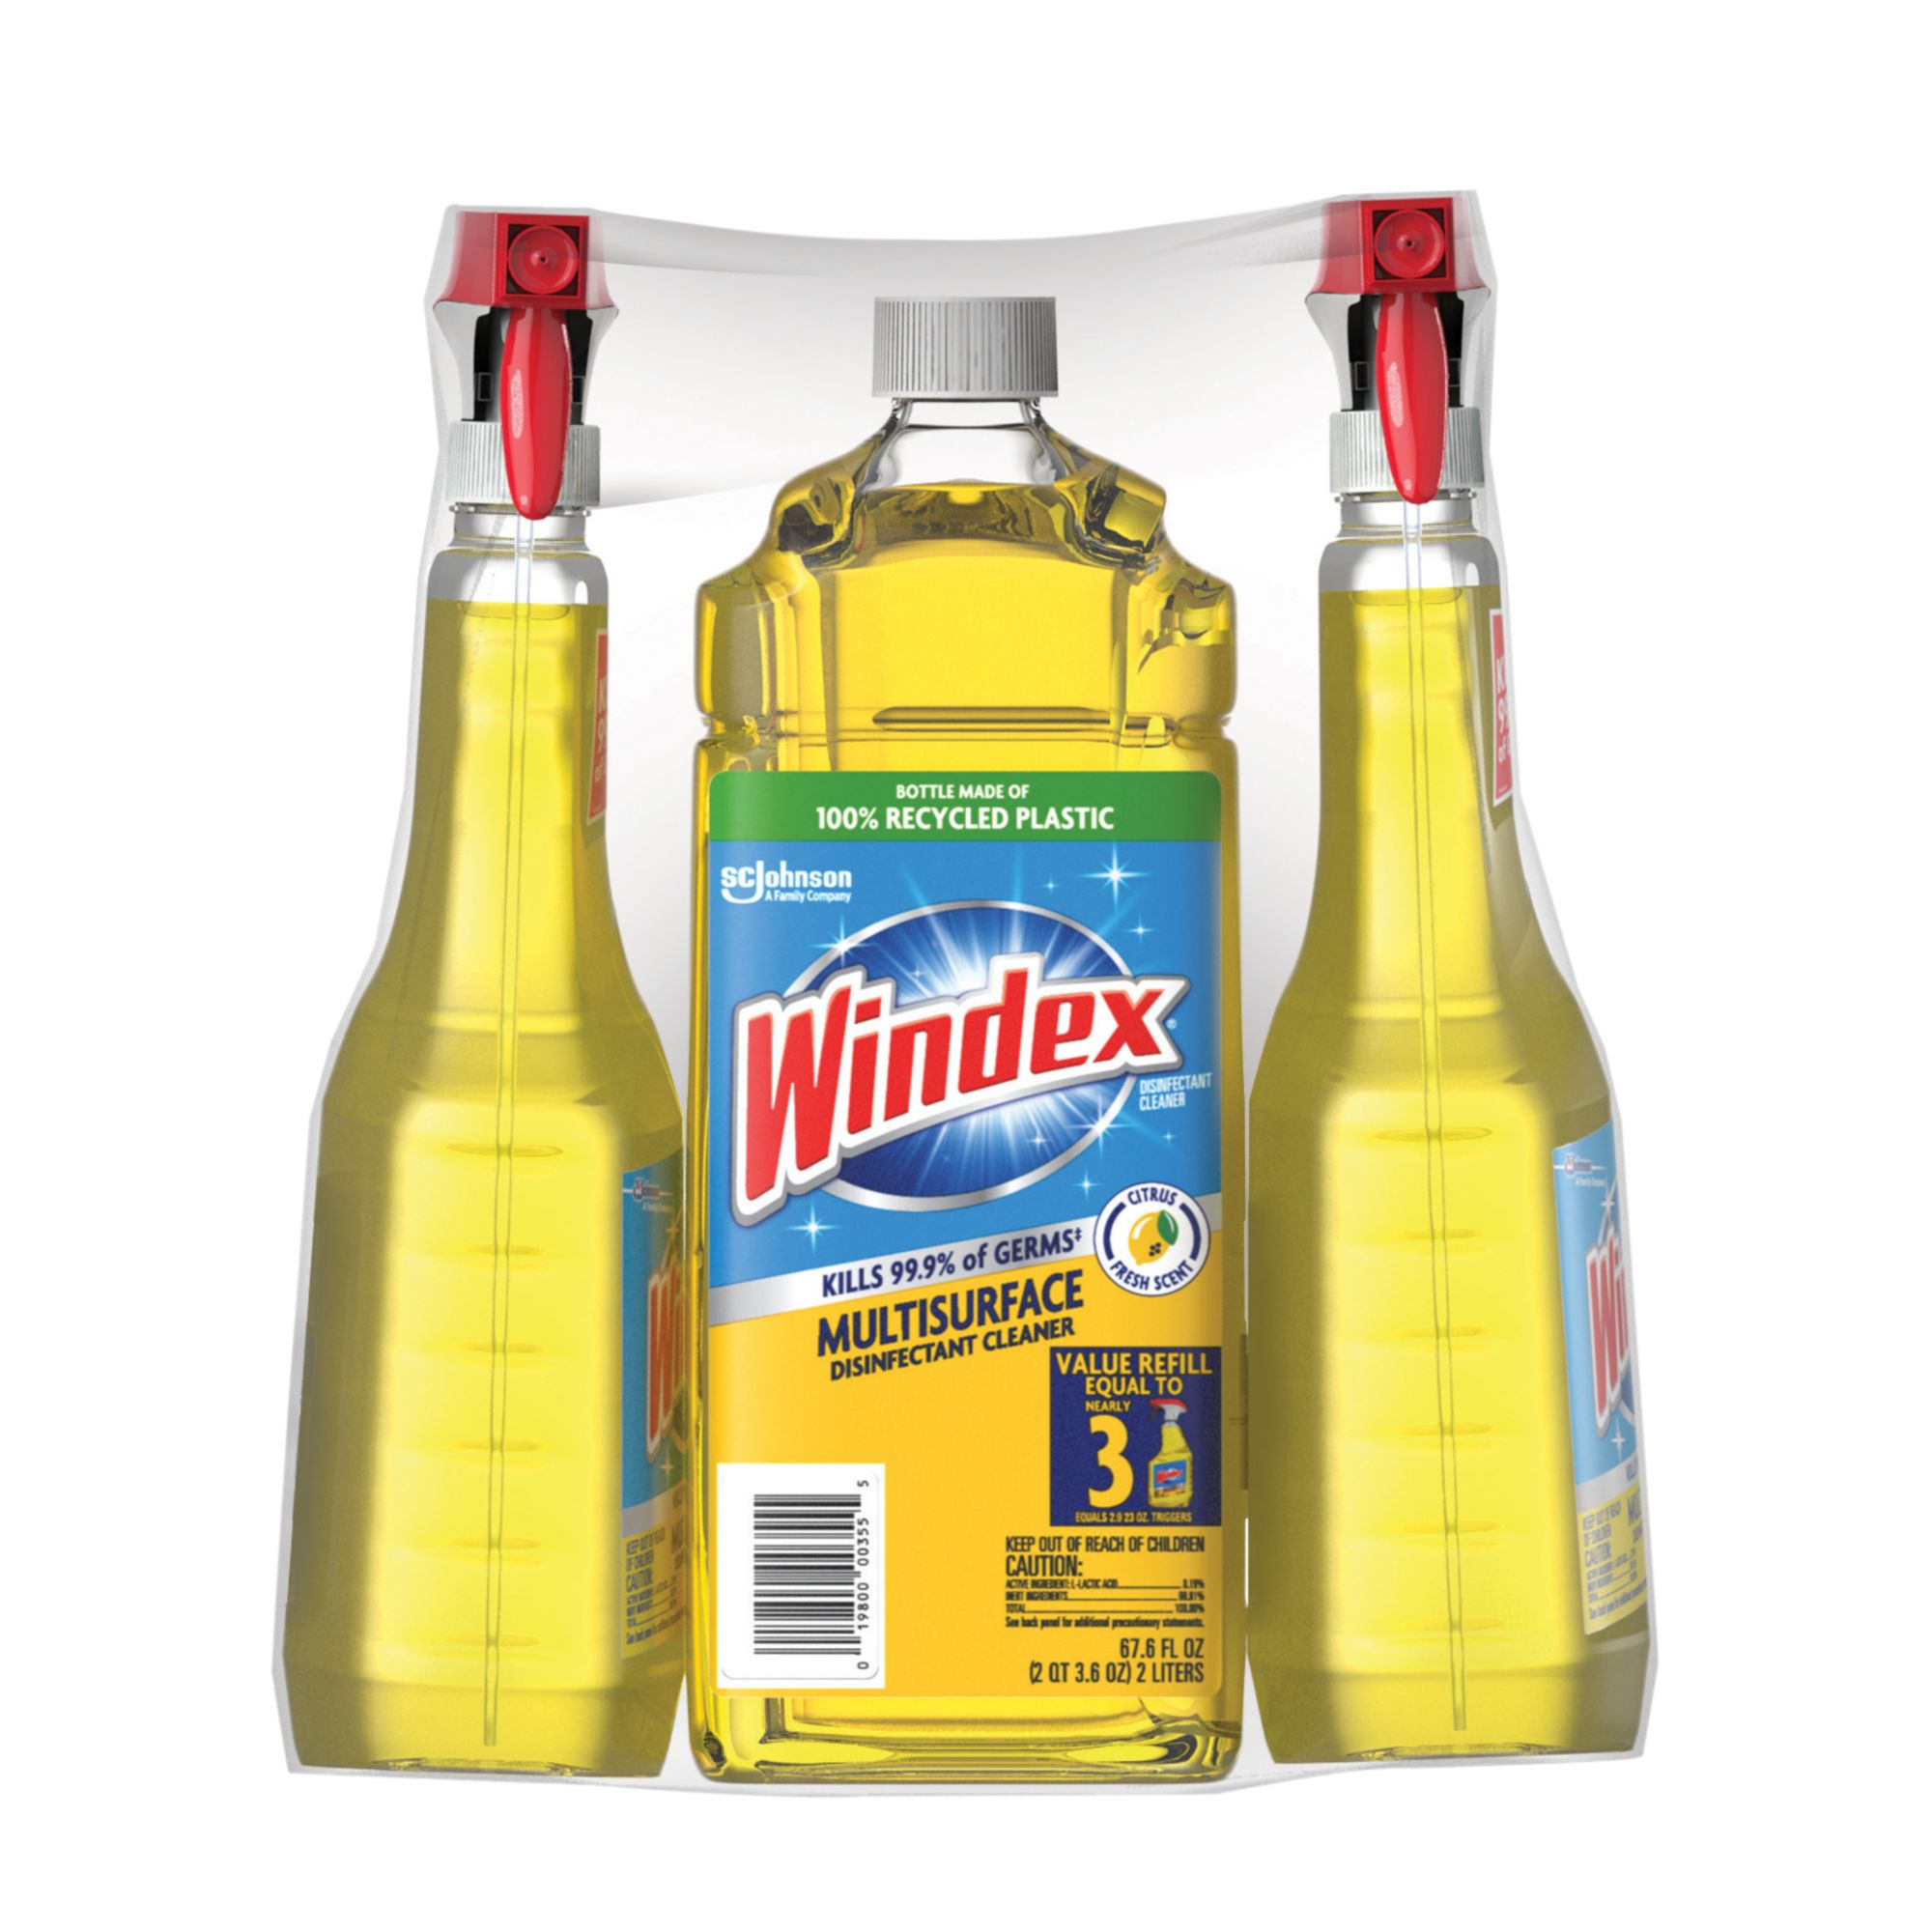 Windex Original Blue Glass and Window Cleaner Bundle - Includes a 23 fl oz  Spray and a 32 fl oz Refill